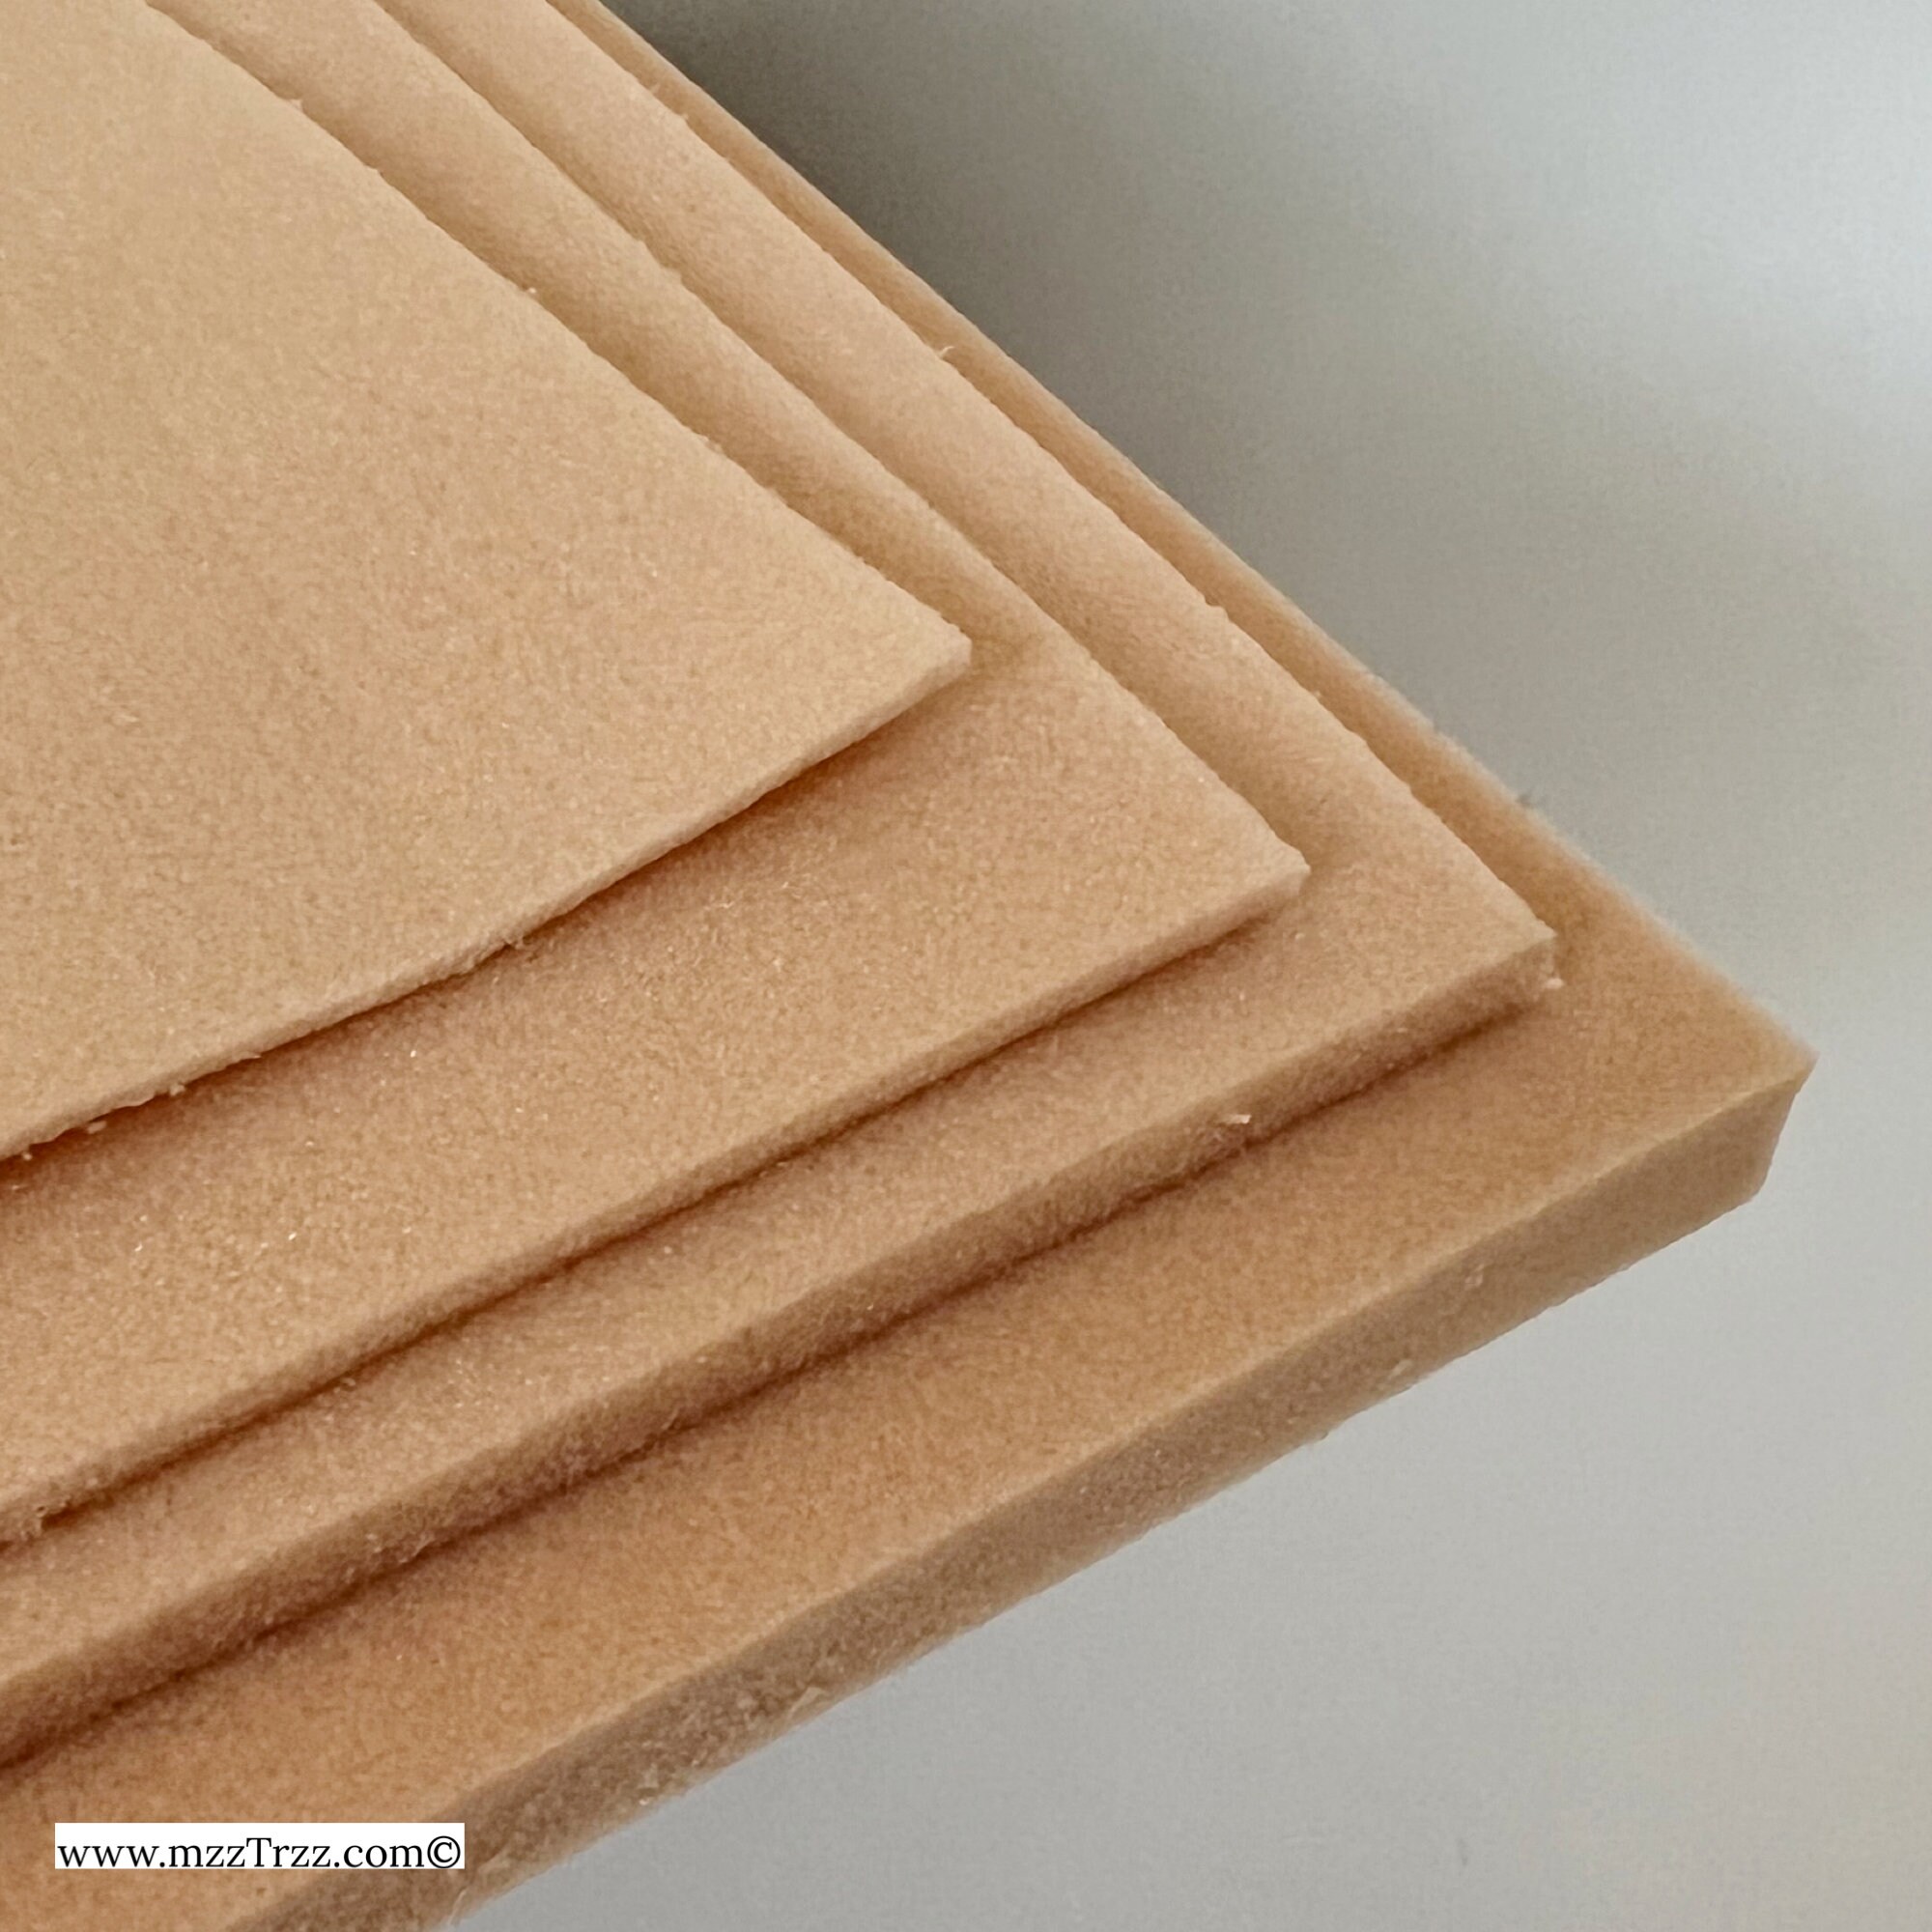 Foam Ninja Polyethylene Foam Sheet 12 X 16 X 1 Inch Thick 2 Pack White Foam  Inserts High Density Closed Cell PE Case Packaging Shipping 